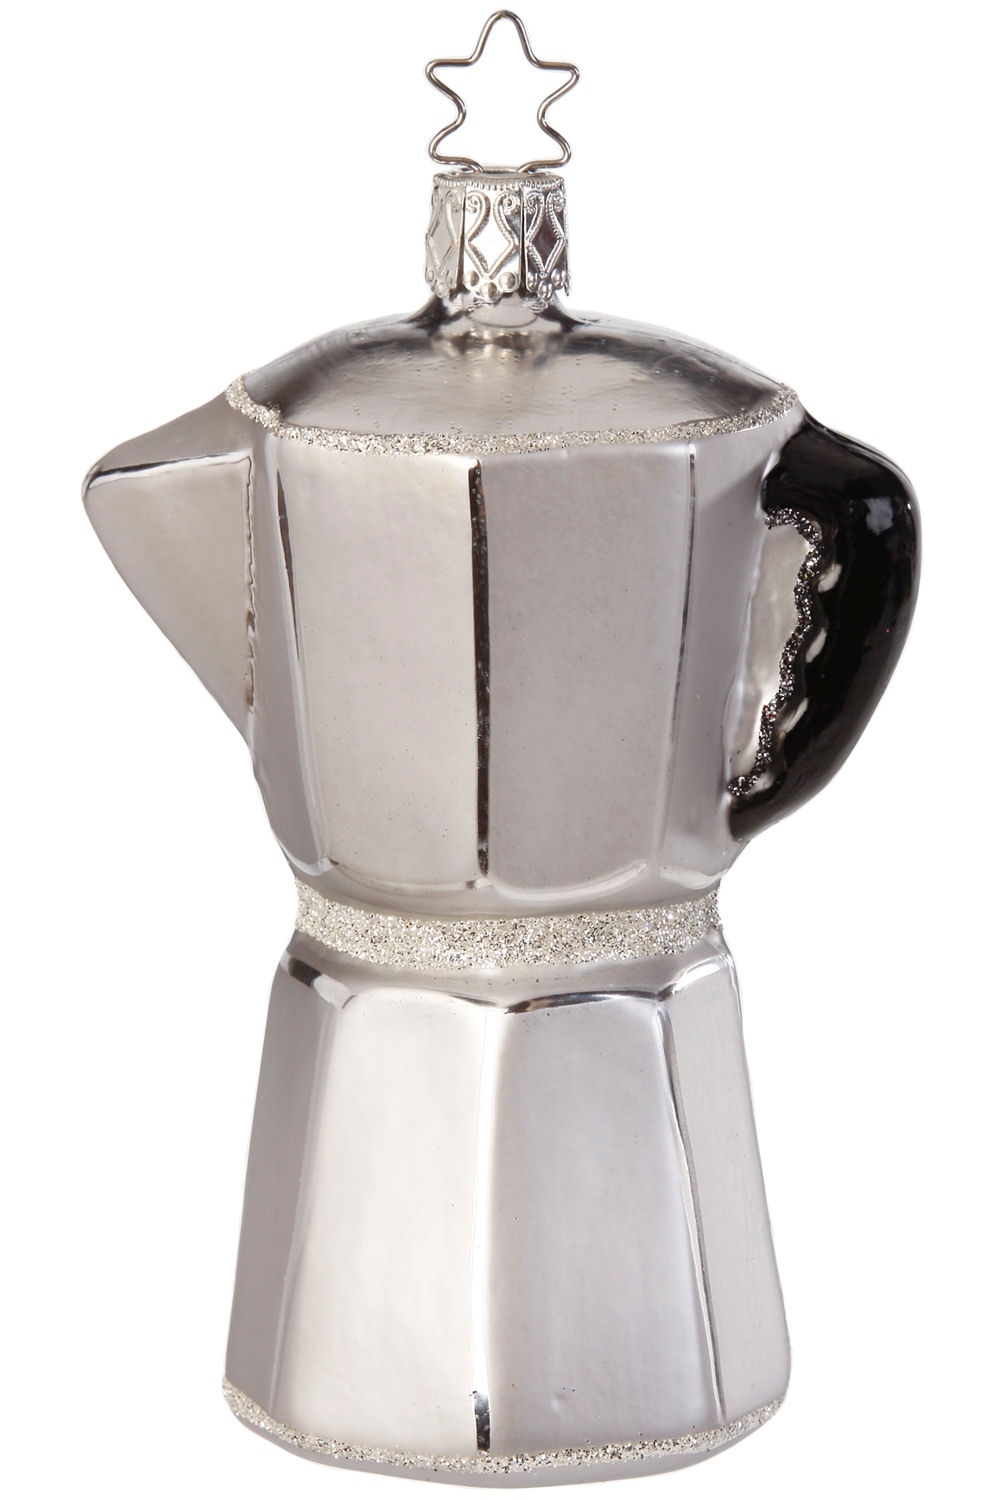 Espresso Coffee Pot : Heirlooms to Cherish, Inge-Glas Ornaments